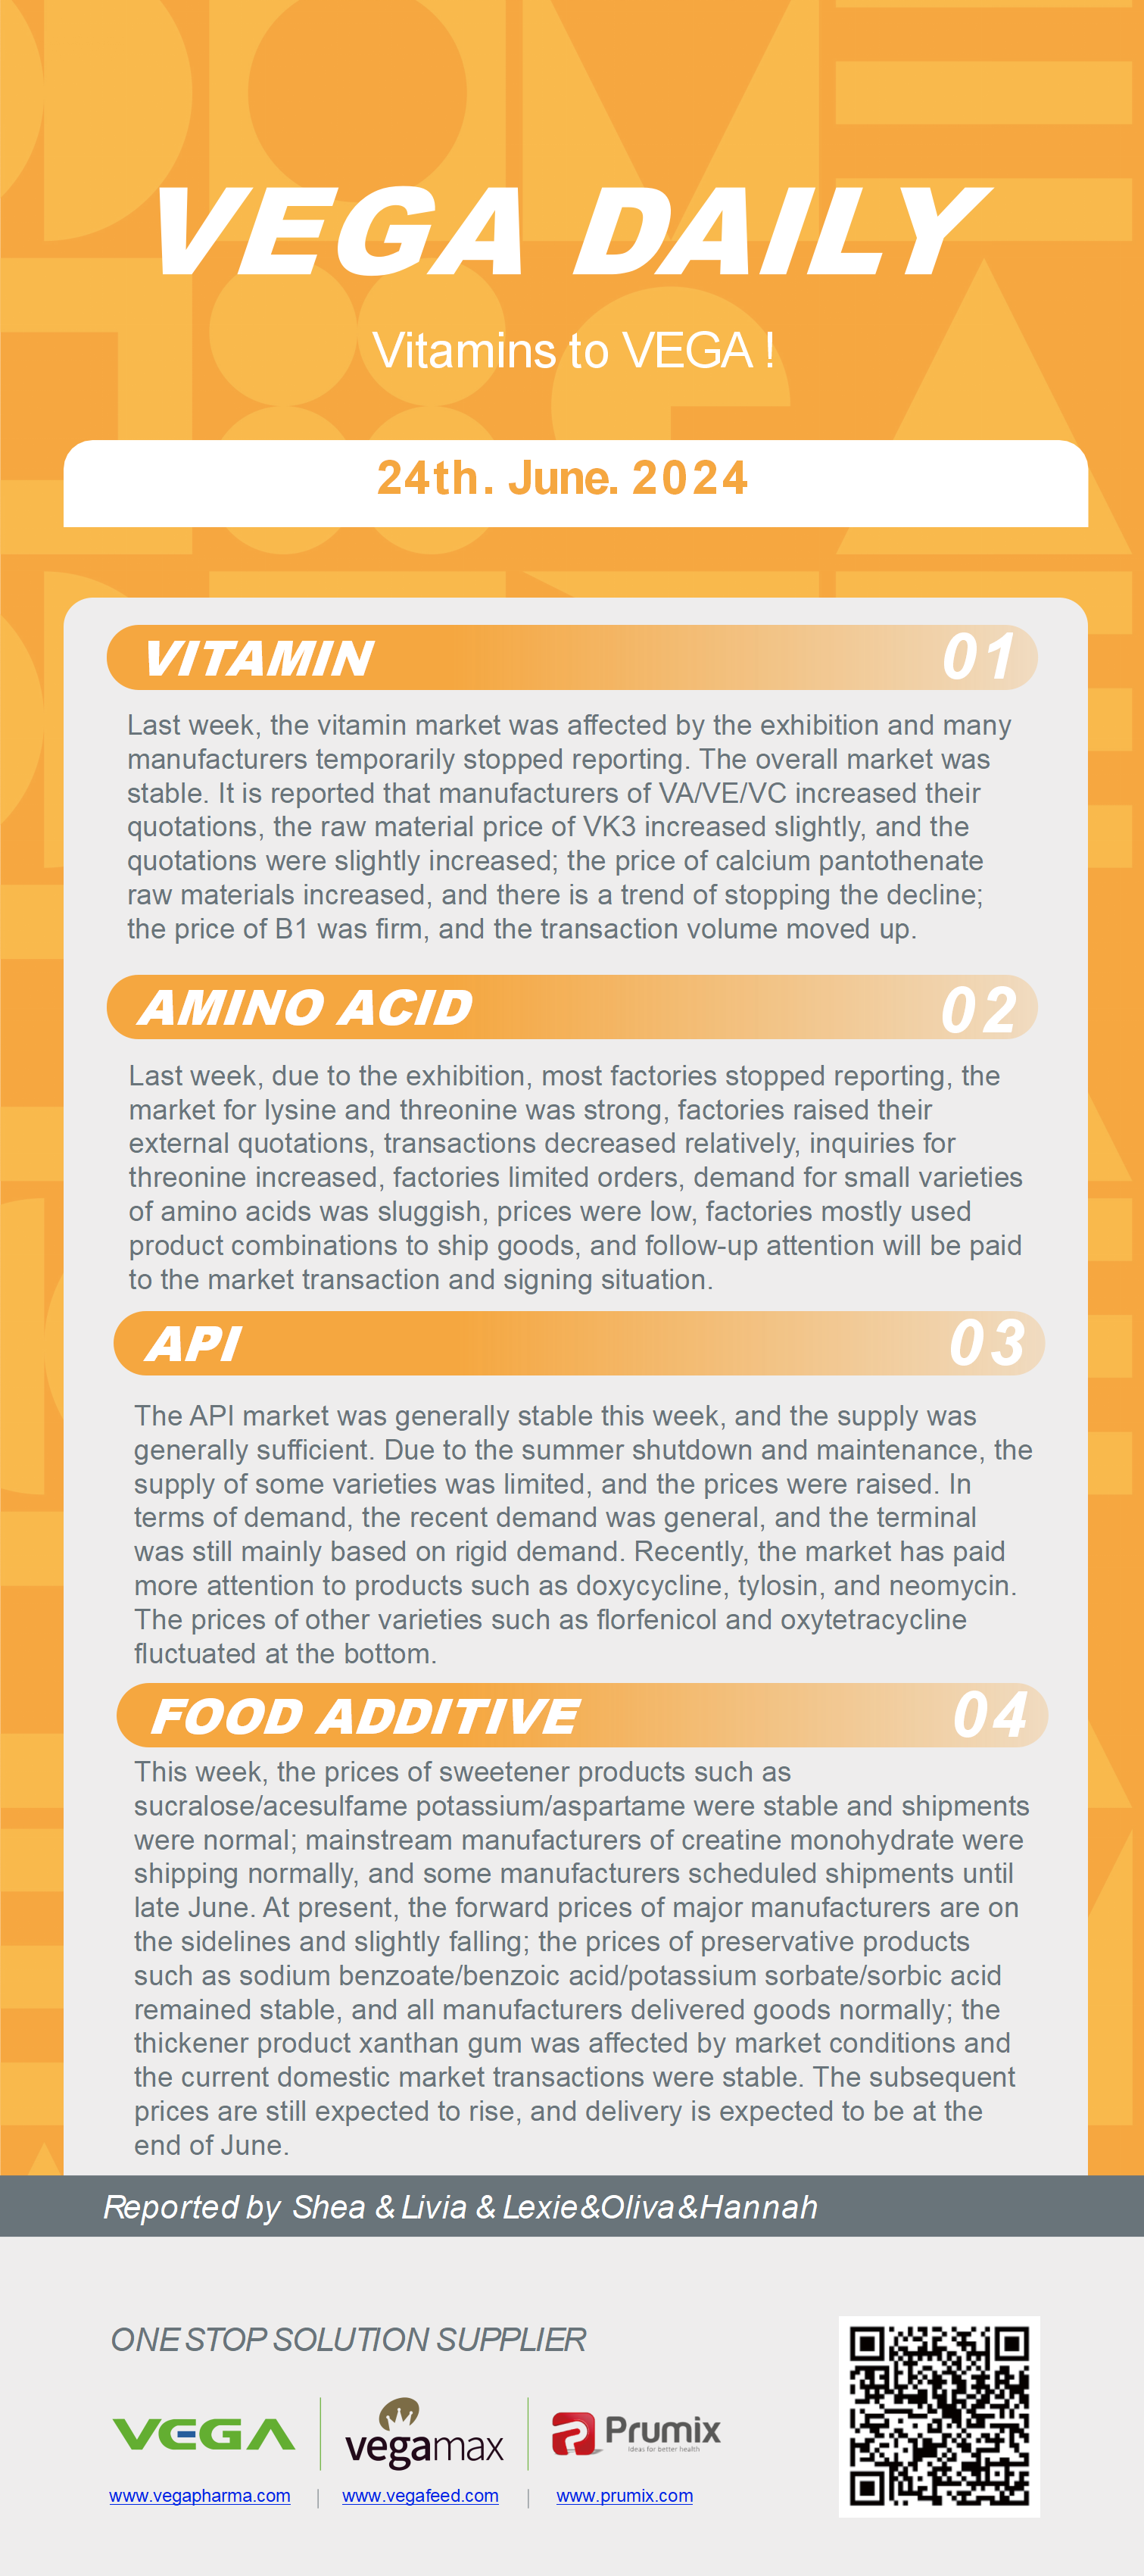 Vega Daily Dated on Jun 24th 2024 Vitamin Amino Acid APl Food Additives.png